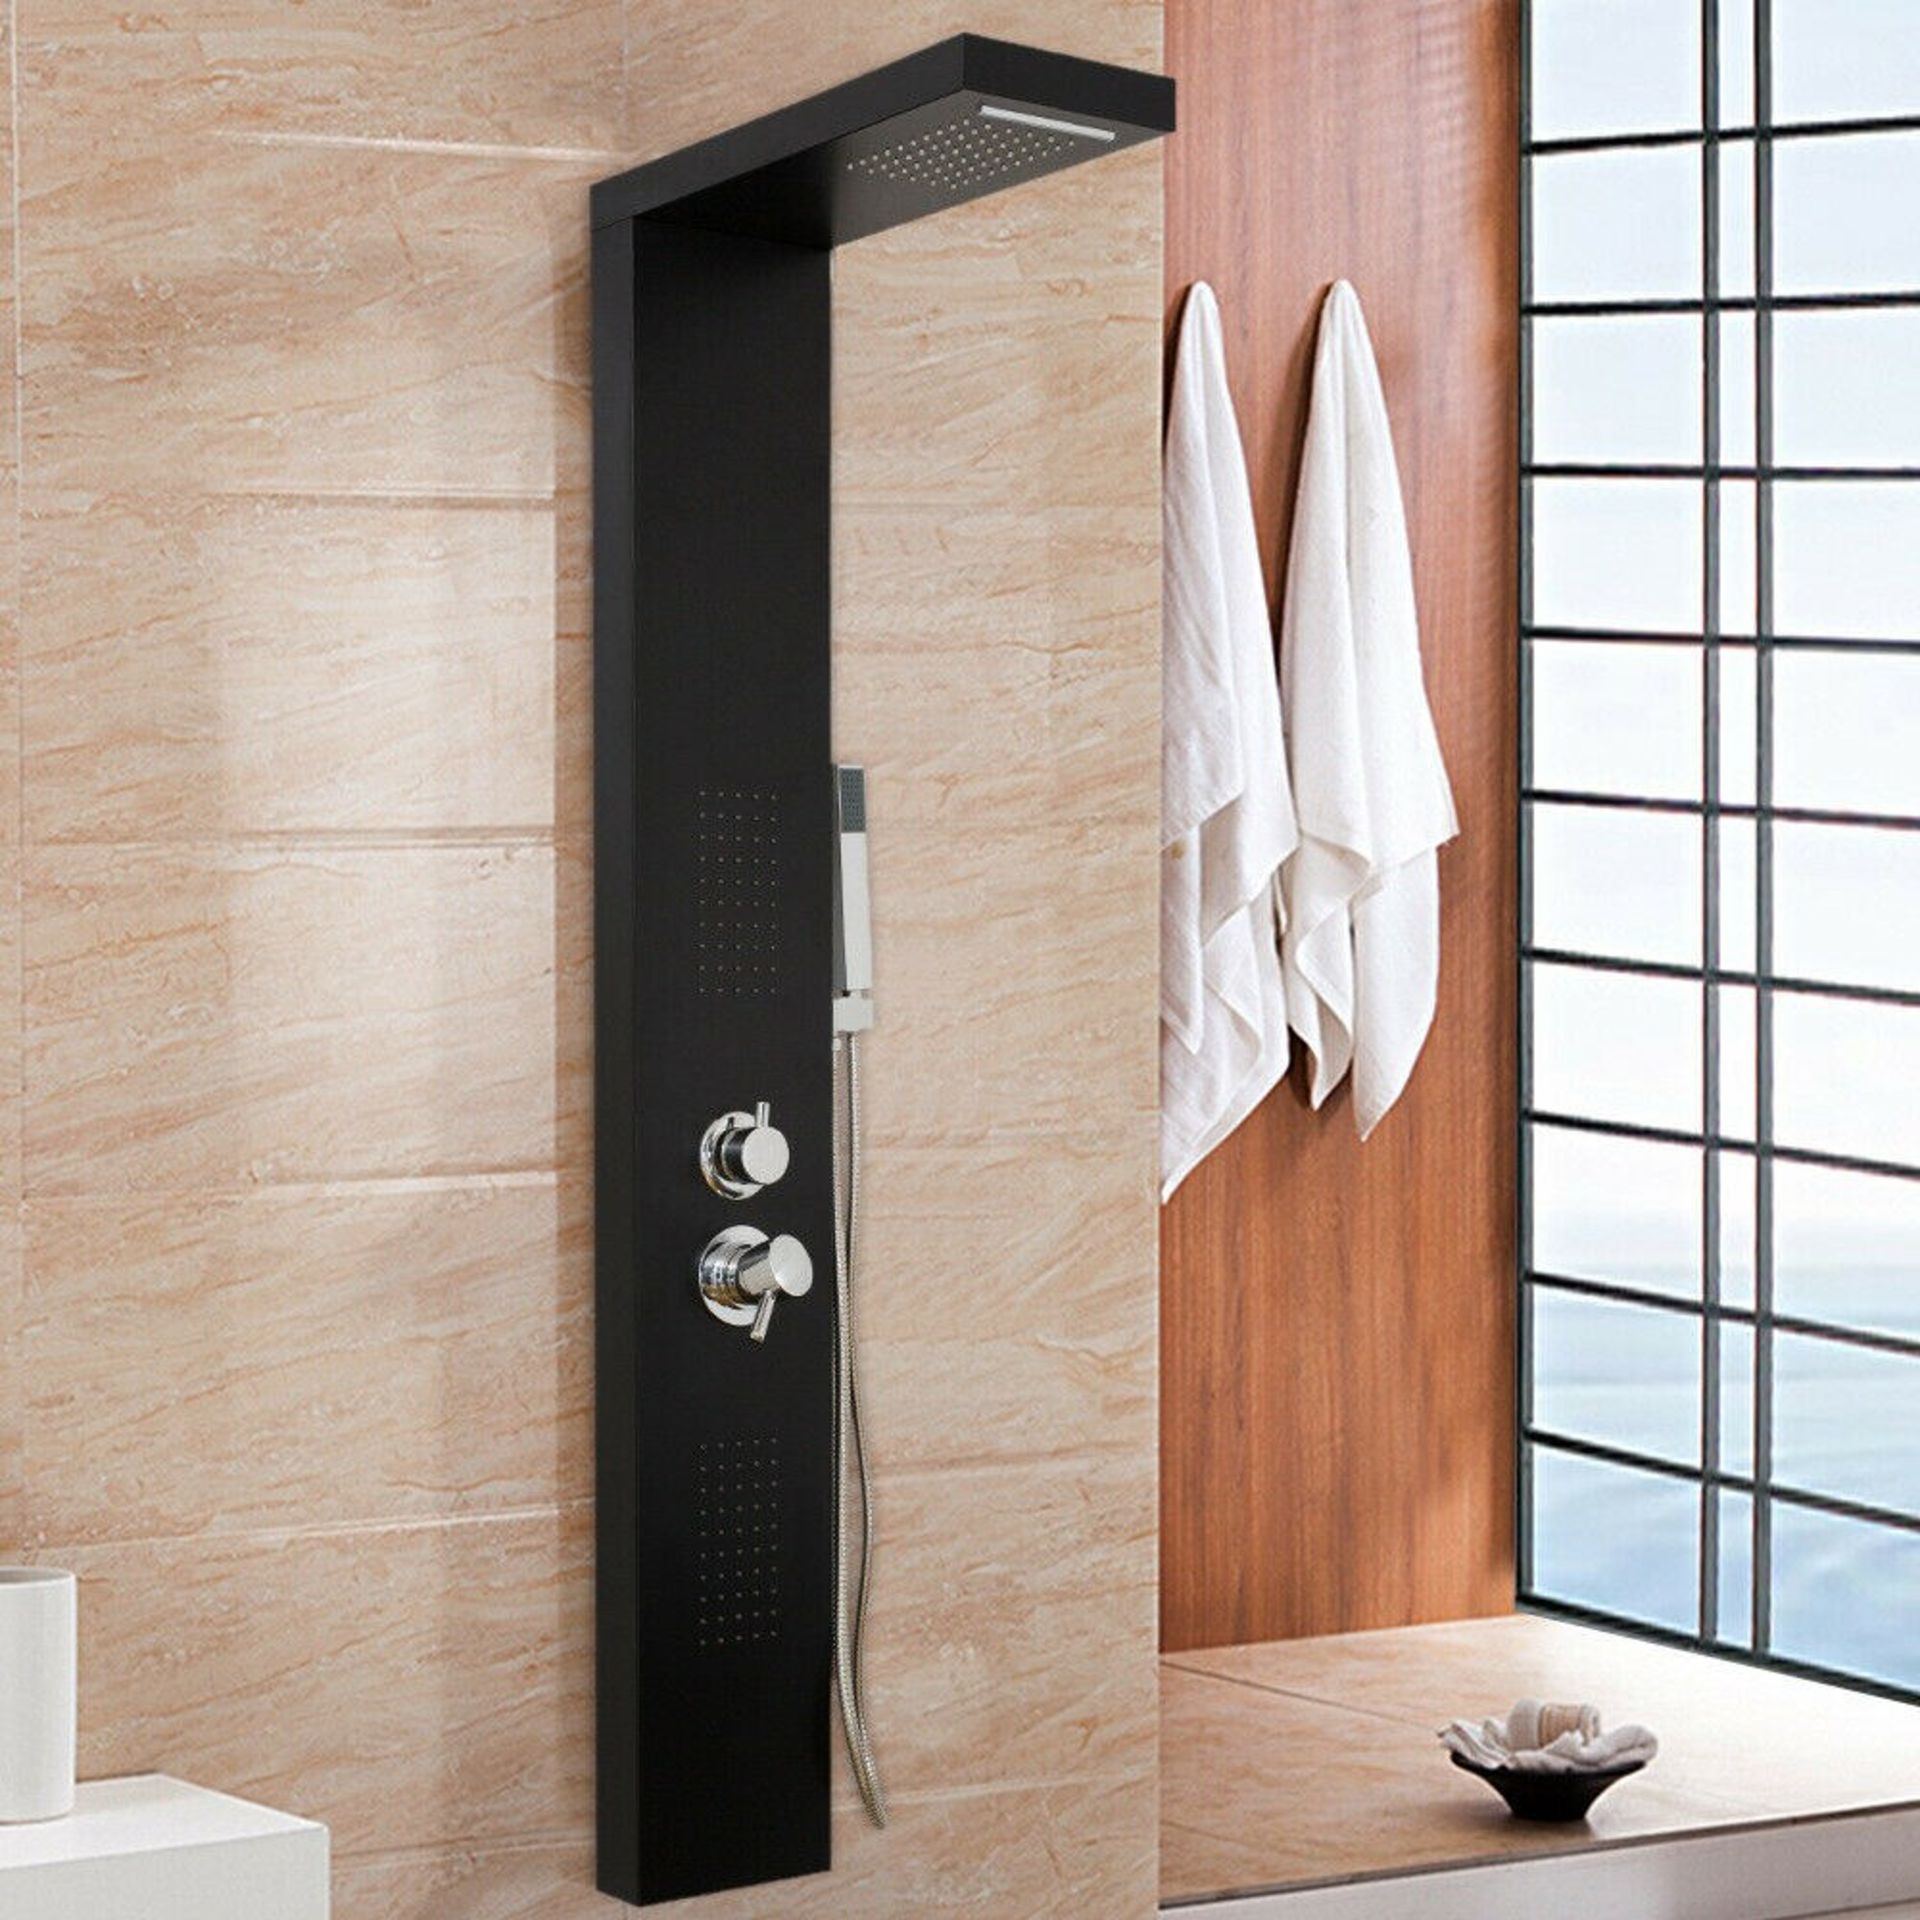 (DE5) Black Square Modern Bathroom Shower Column Tower Panel System With Hand Held & Massage Je...